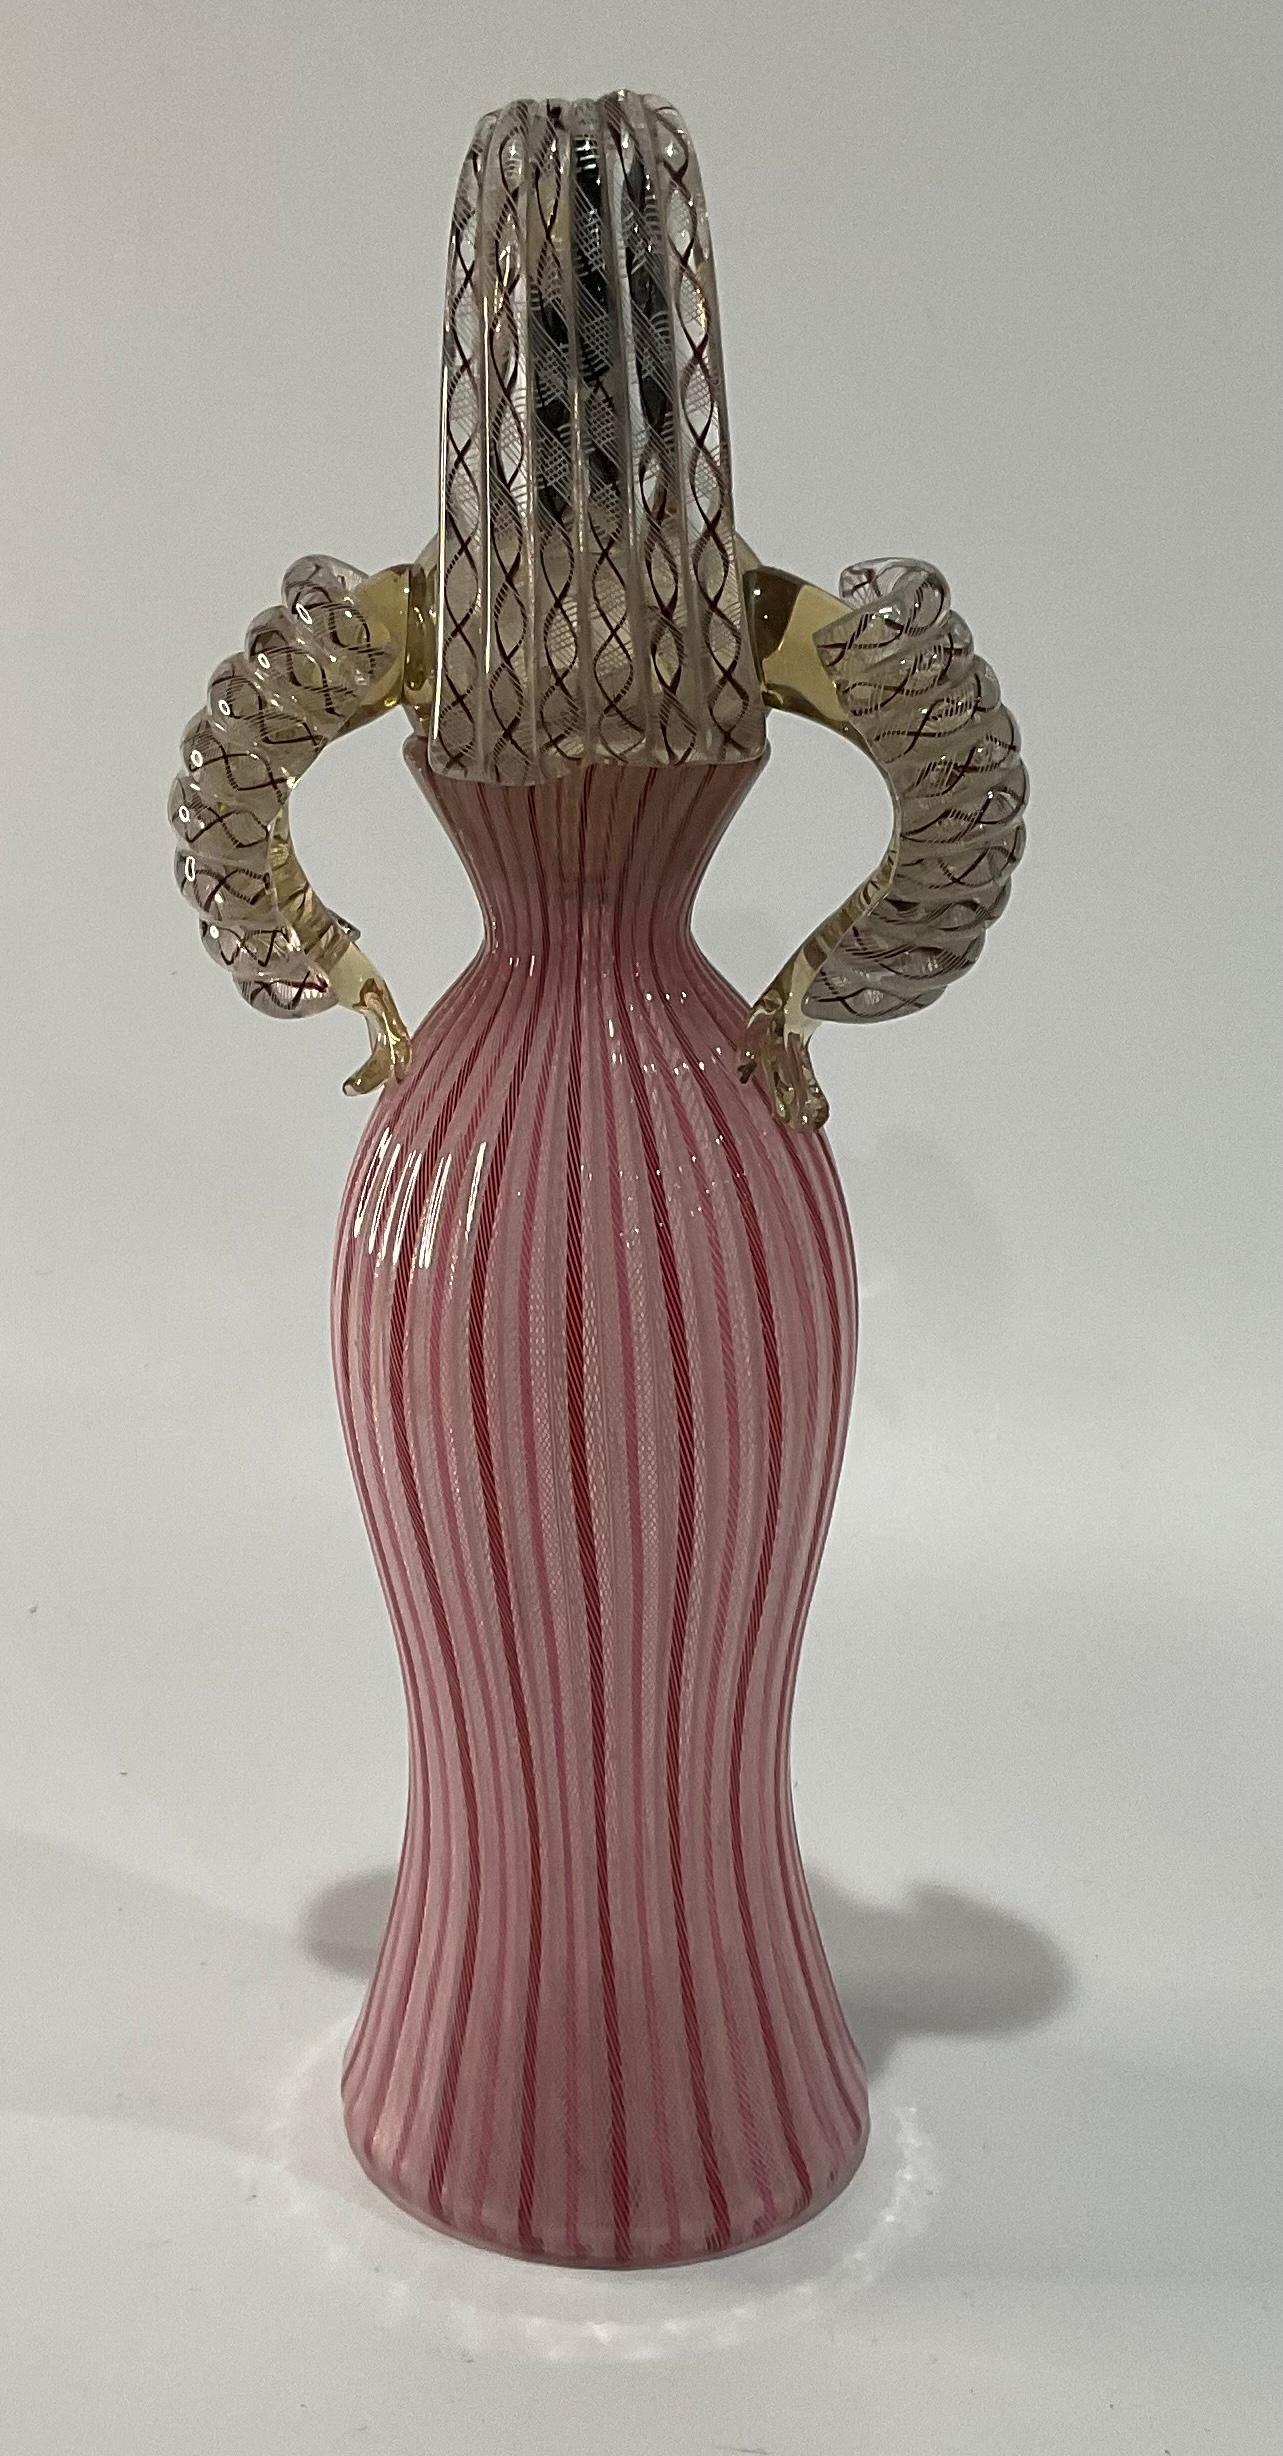 Rare Bride Figure Model 2993 designed by Fulvio Bianconi for Venini Circa 1950’s. The figure is acid signed Venini Murano Italia. 


One of the most famous post-war Italian graphic designers, Fulvio Bianconi began his career learning the art of